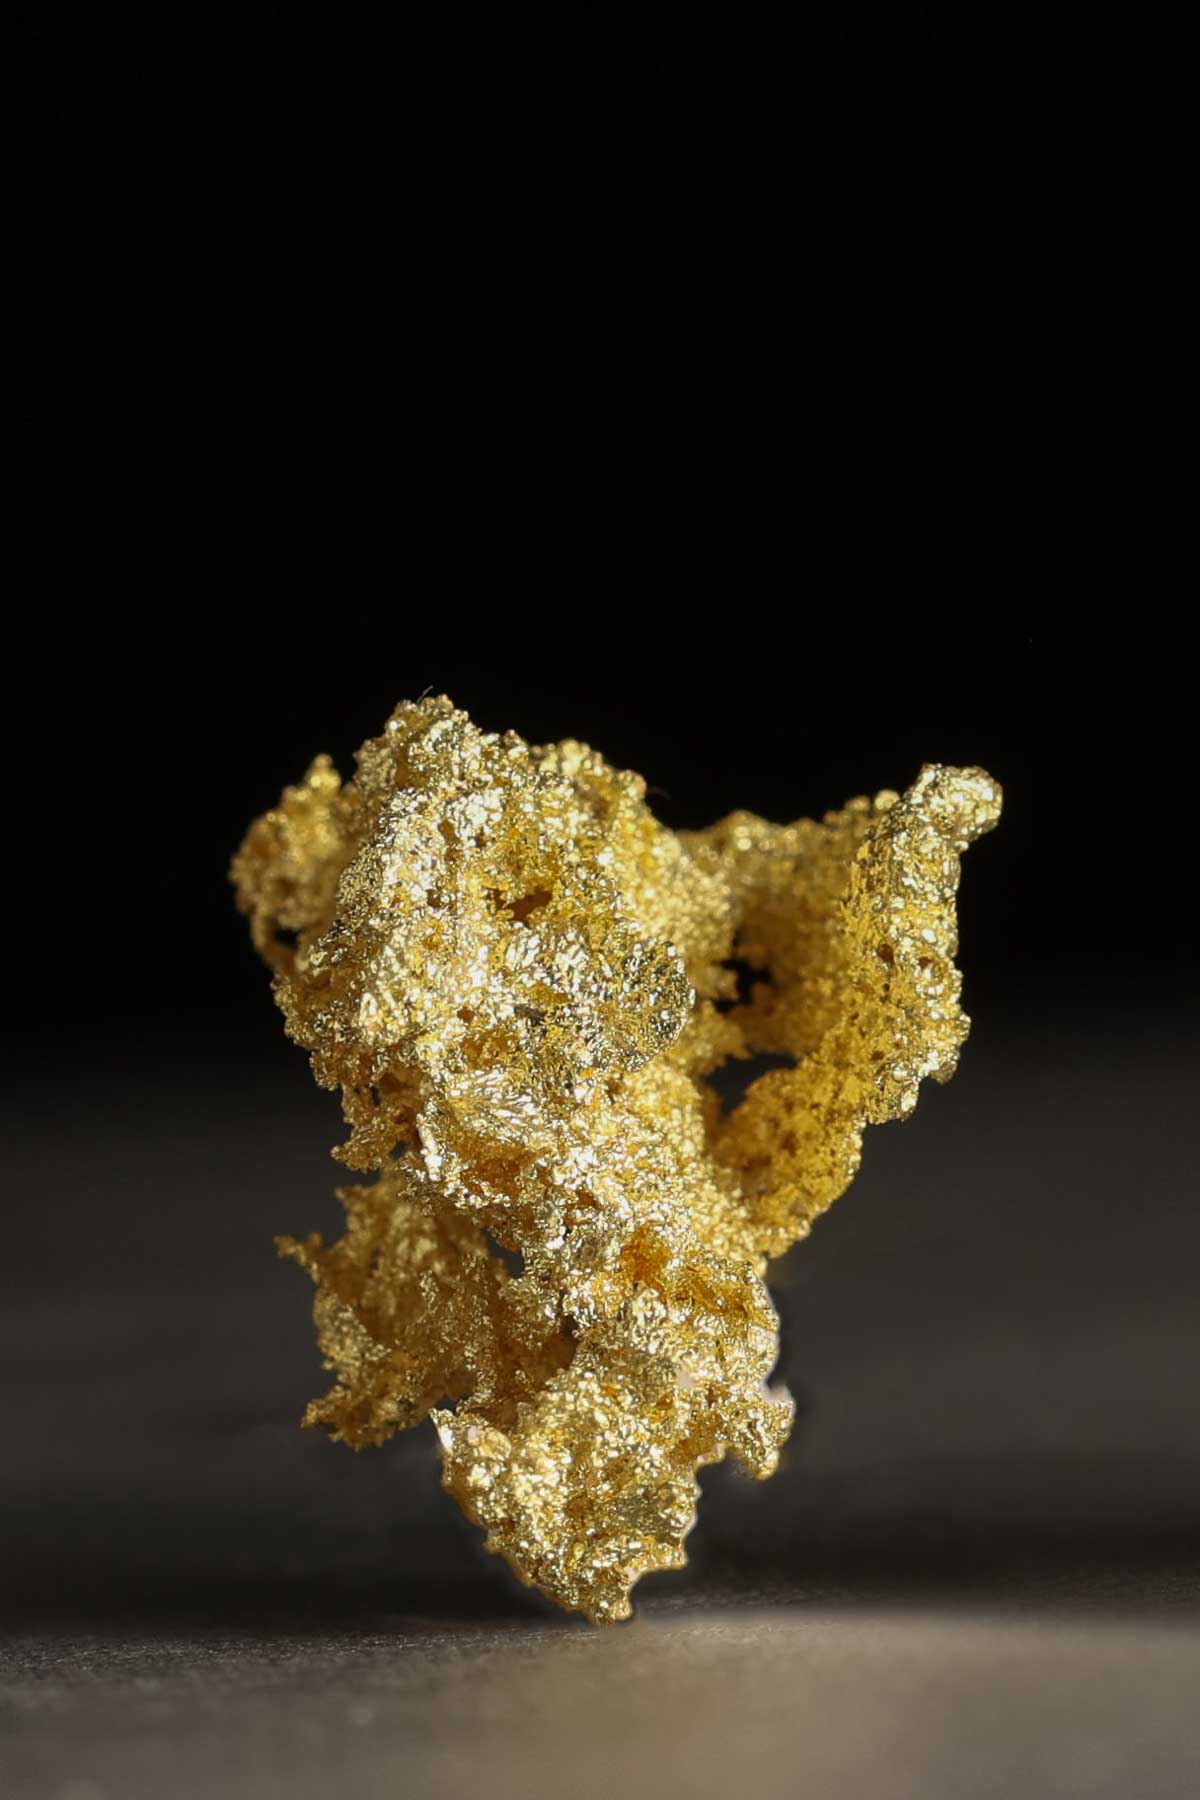 Intricate Crystalline Leaf Gold Specimen from the Oriental Mine